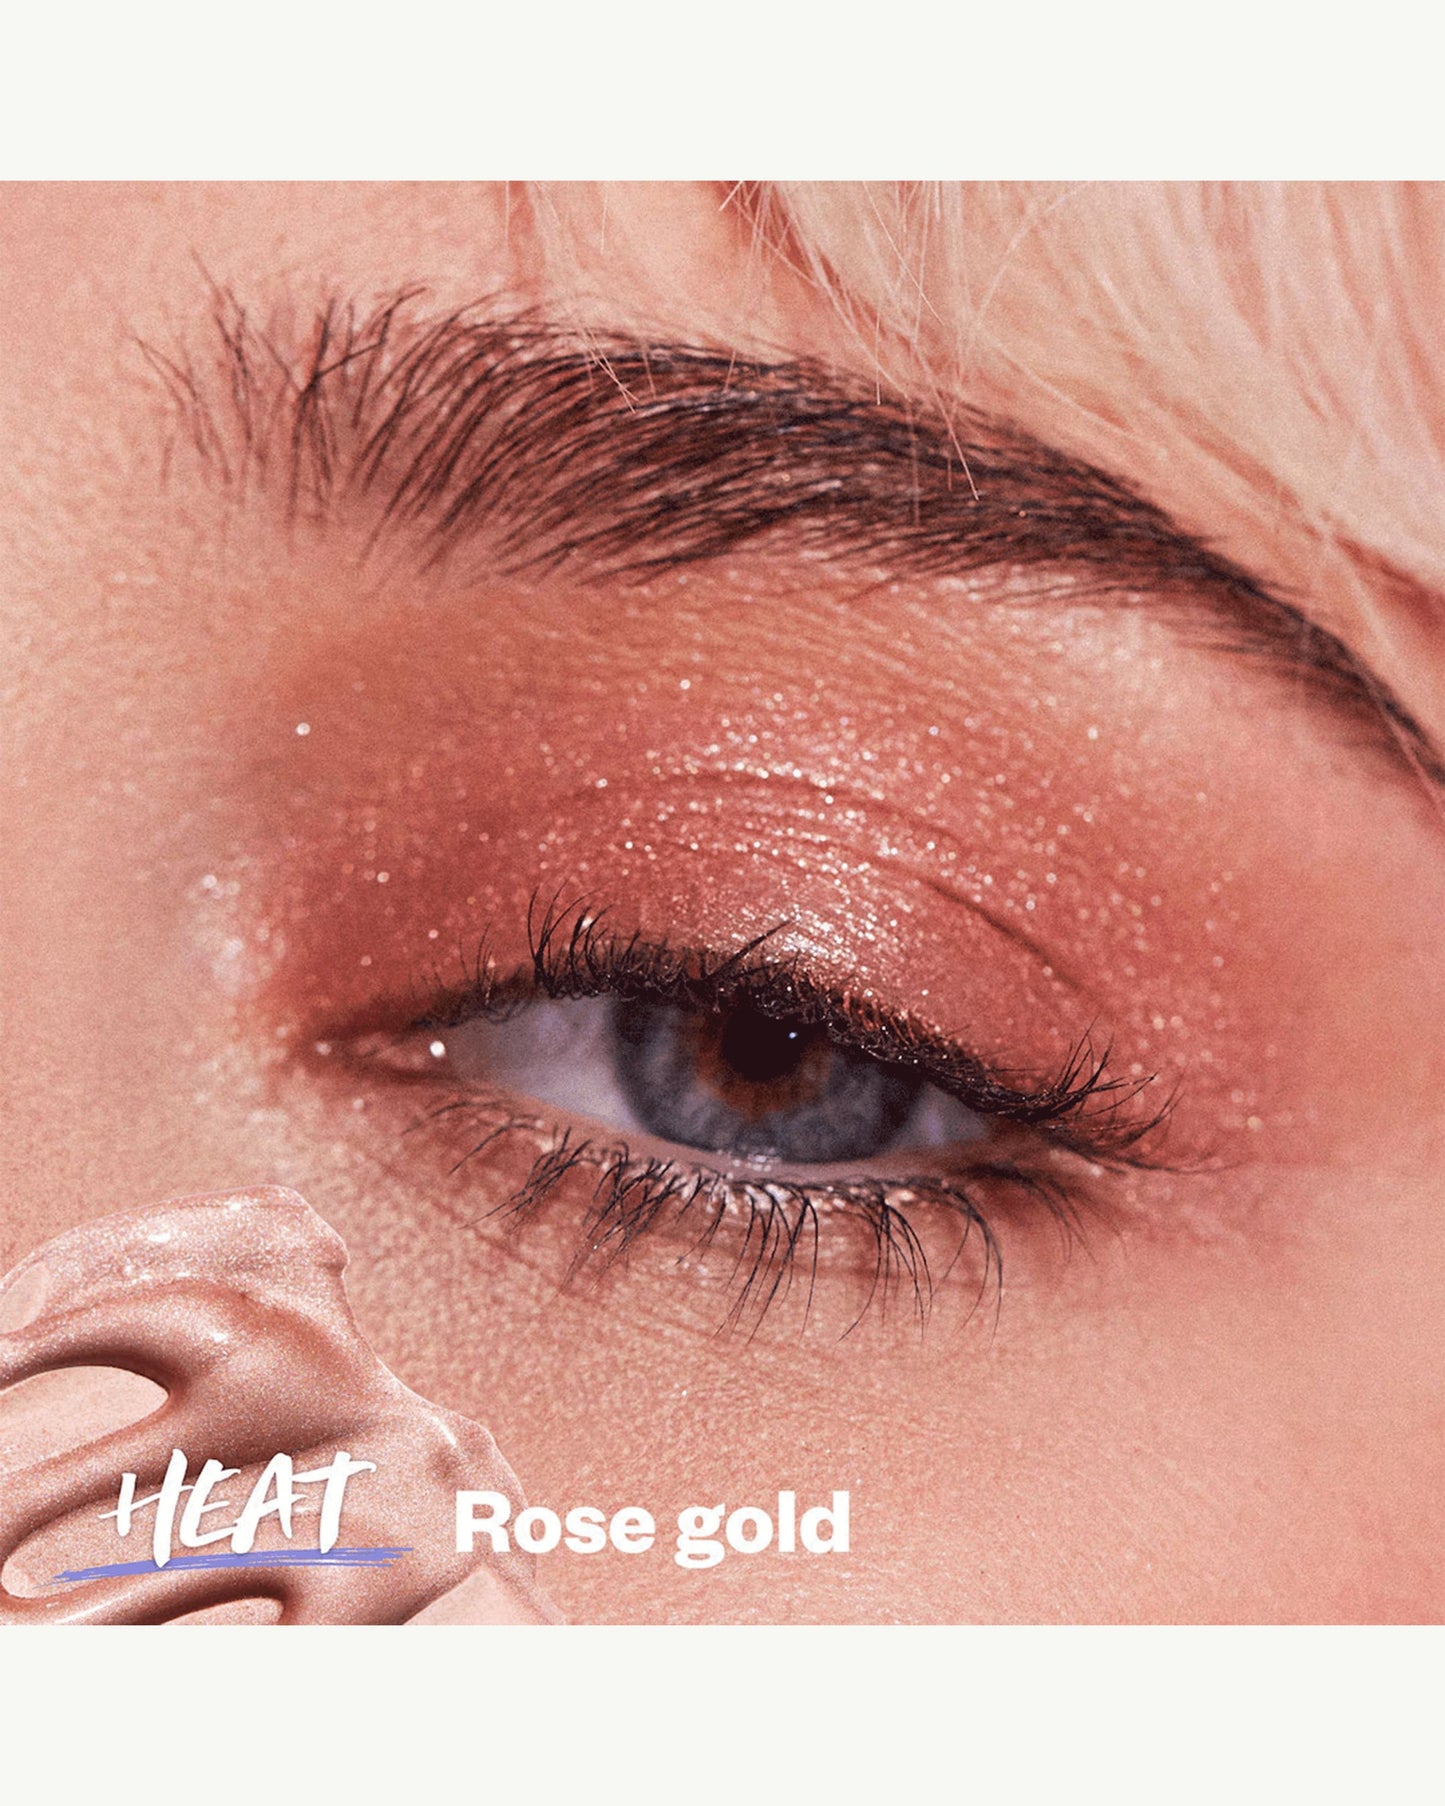 Heat (rose gold)